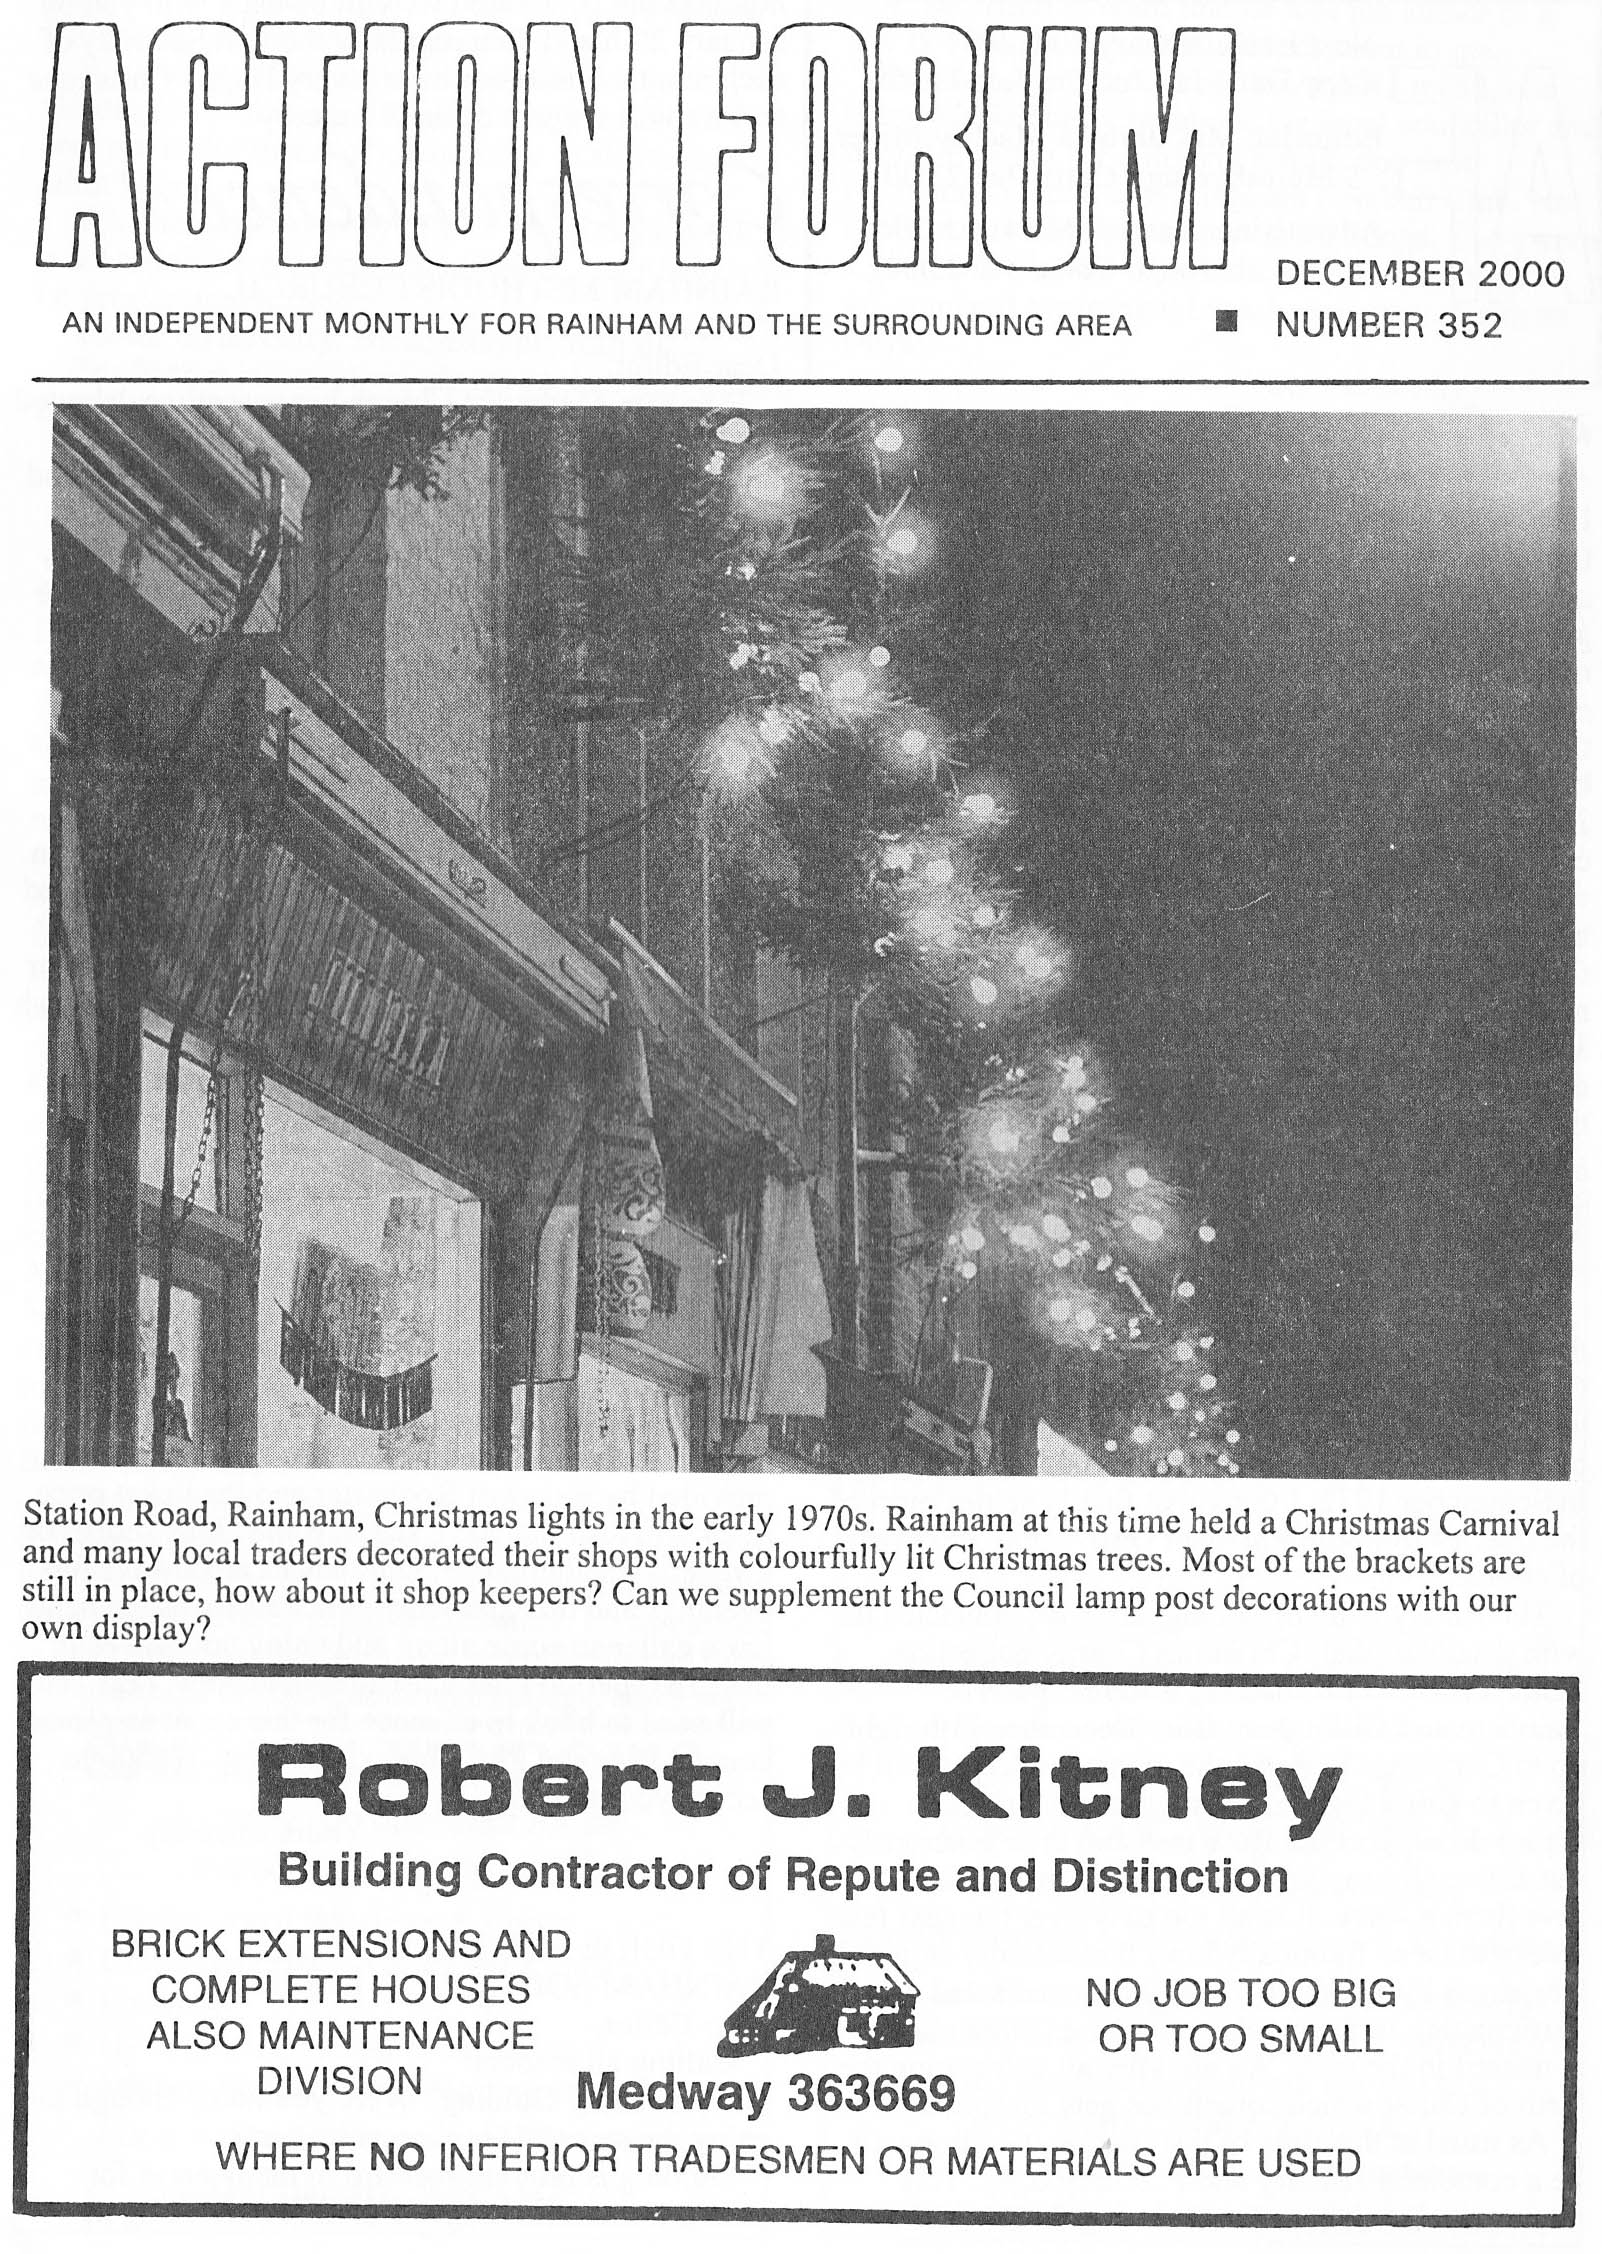 Cover photo of Rainham Christmas lights in 1970s 